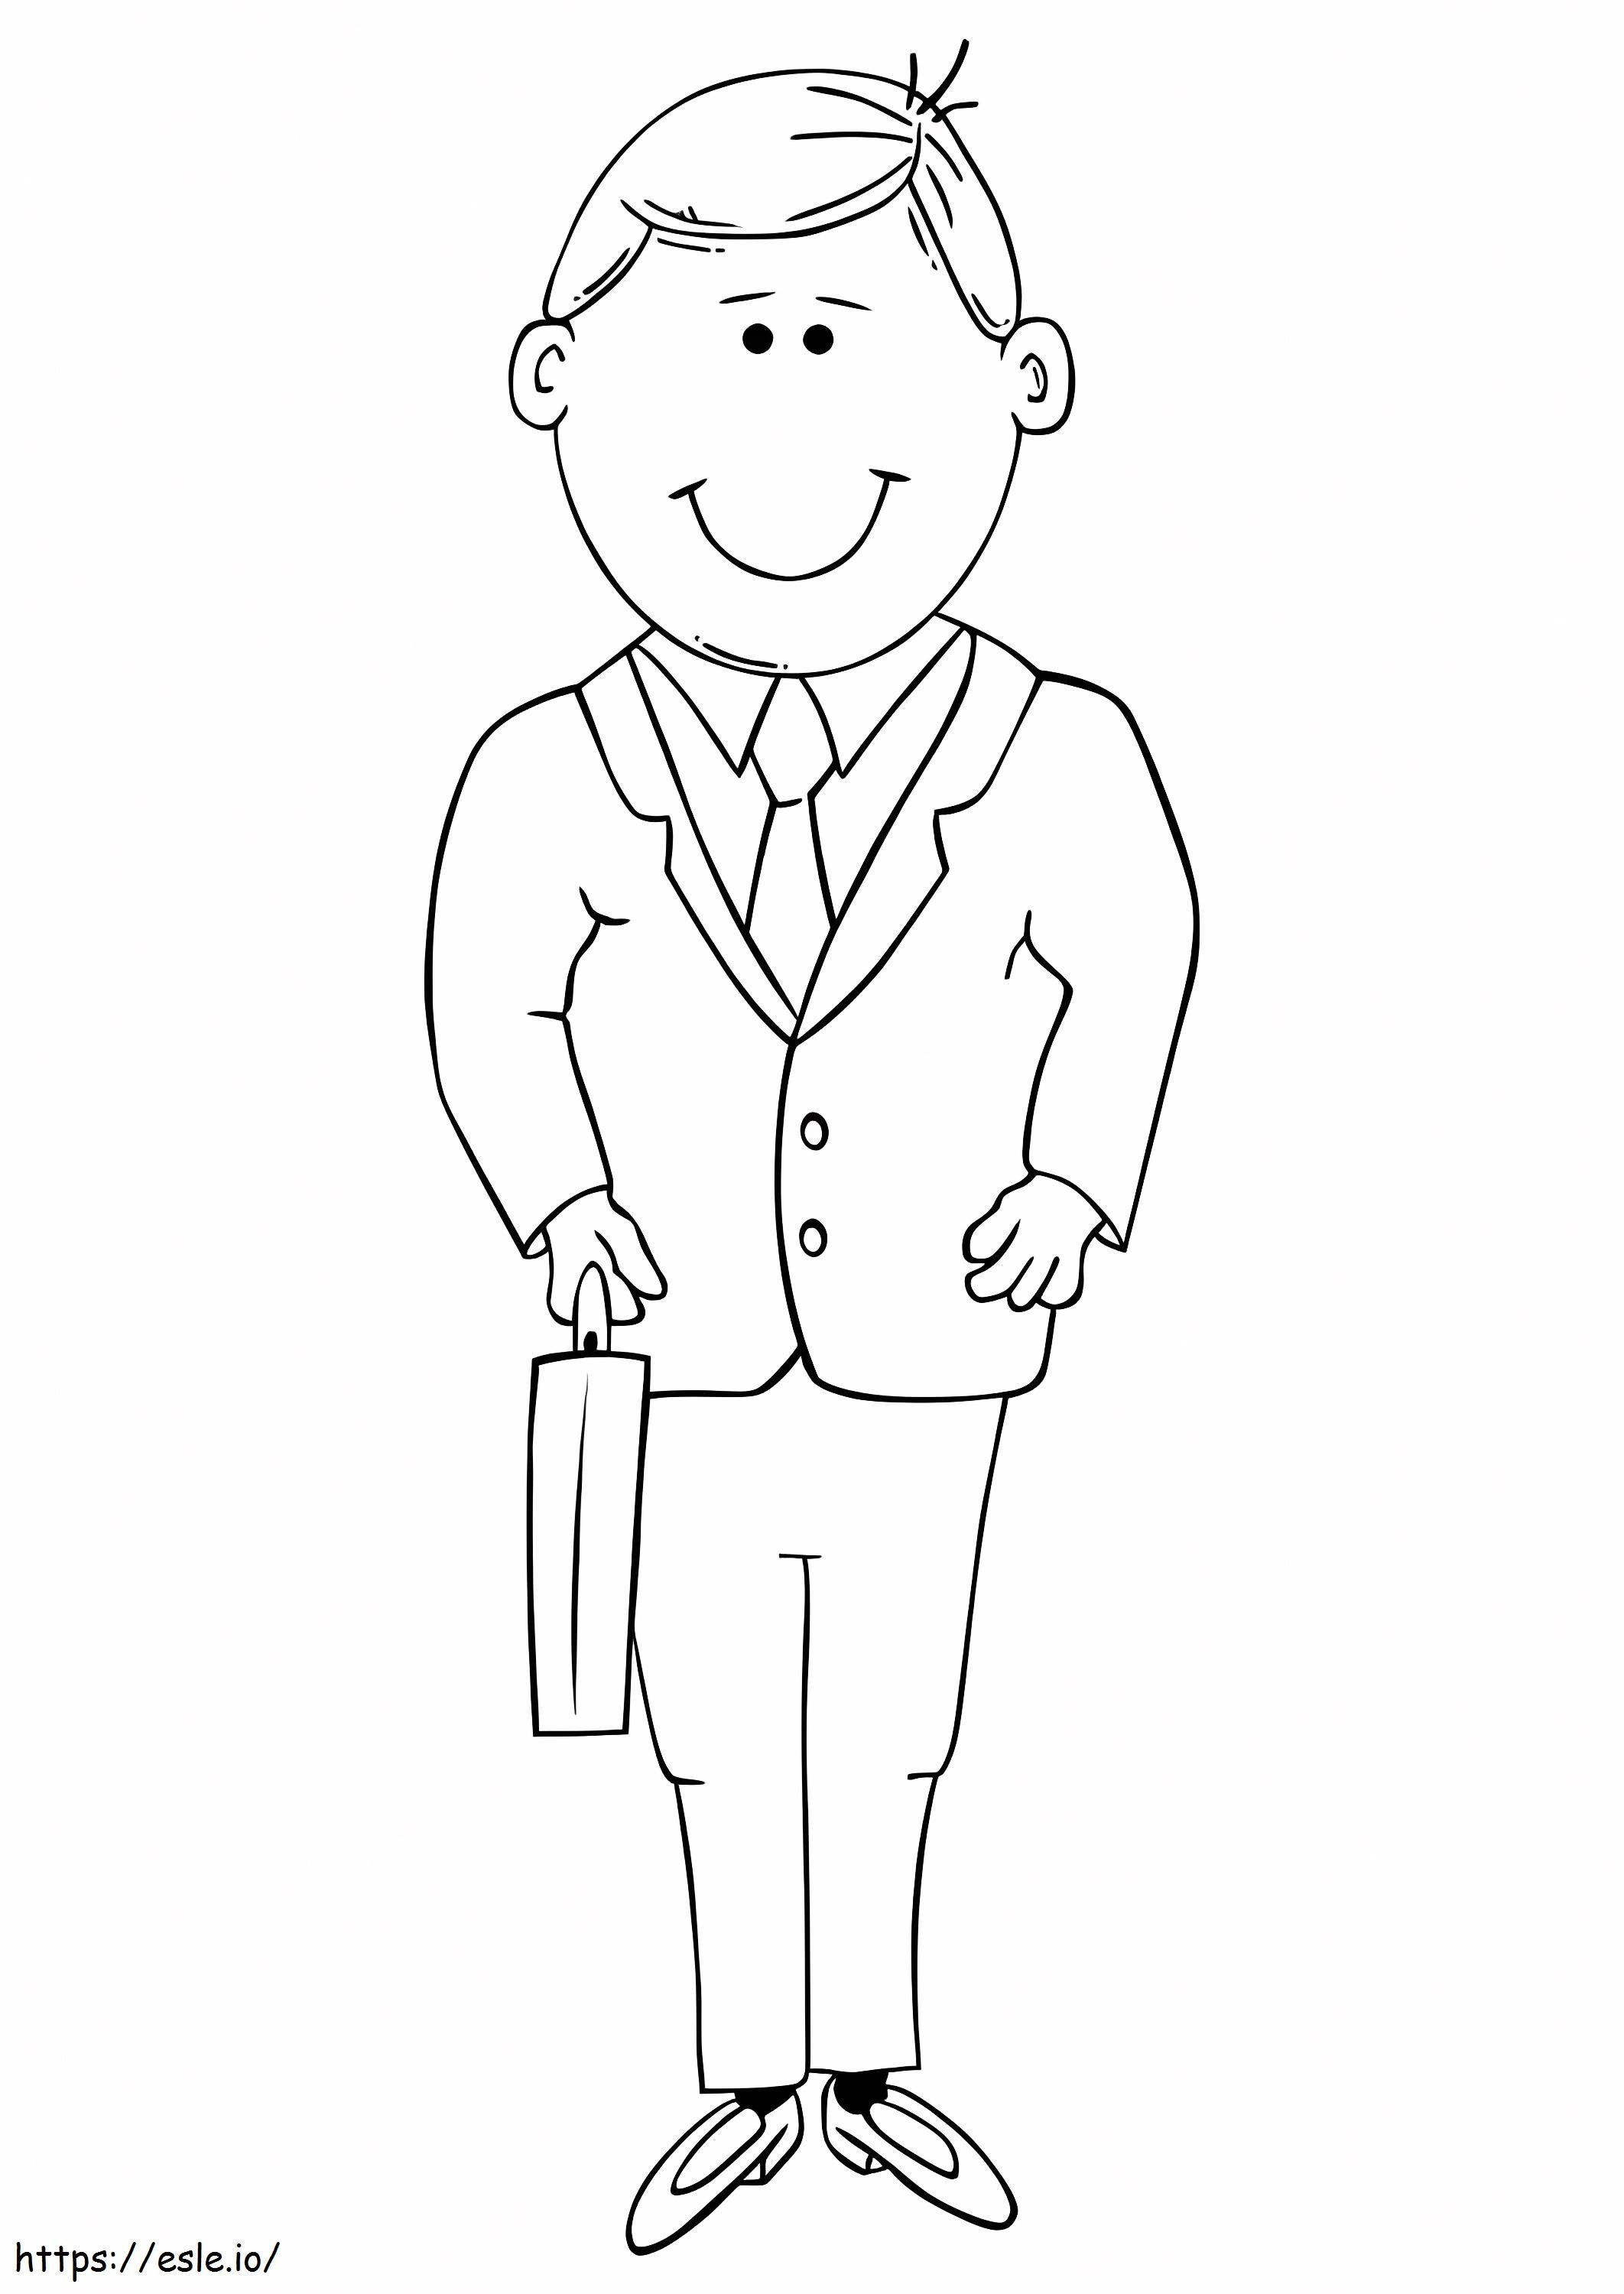 Smiling Baic Businessman coloring page